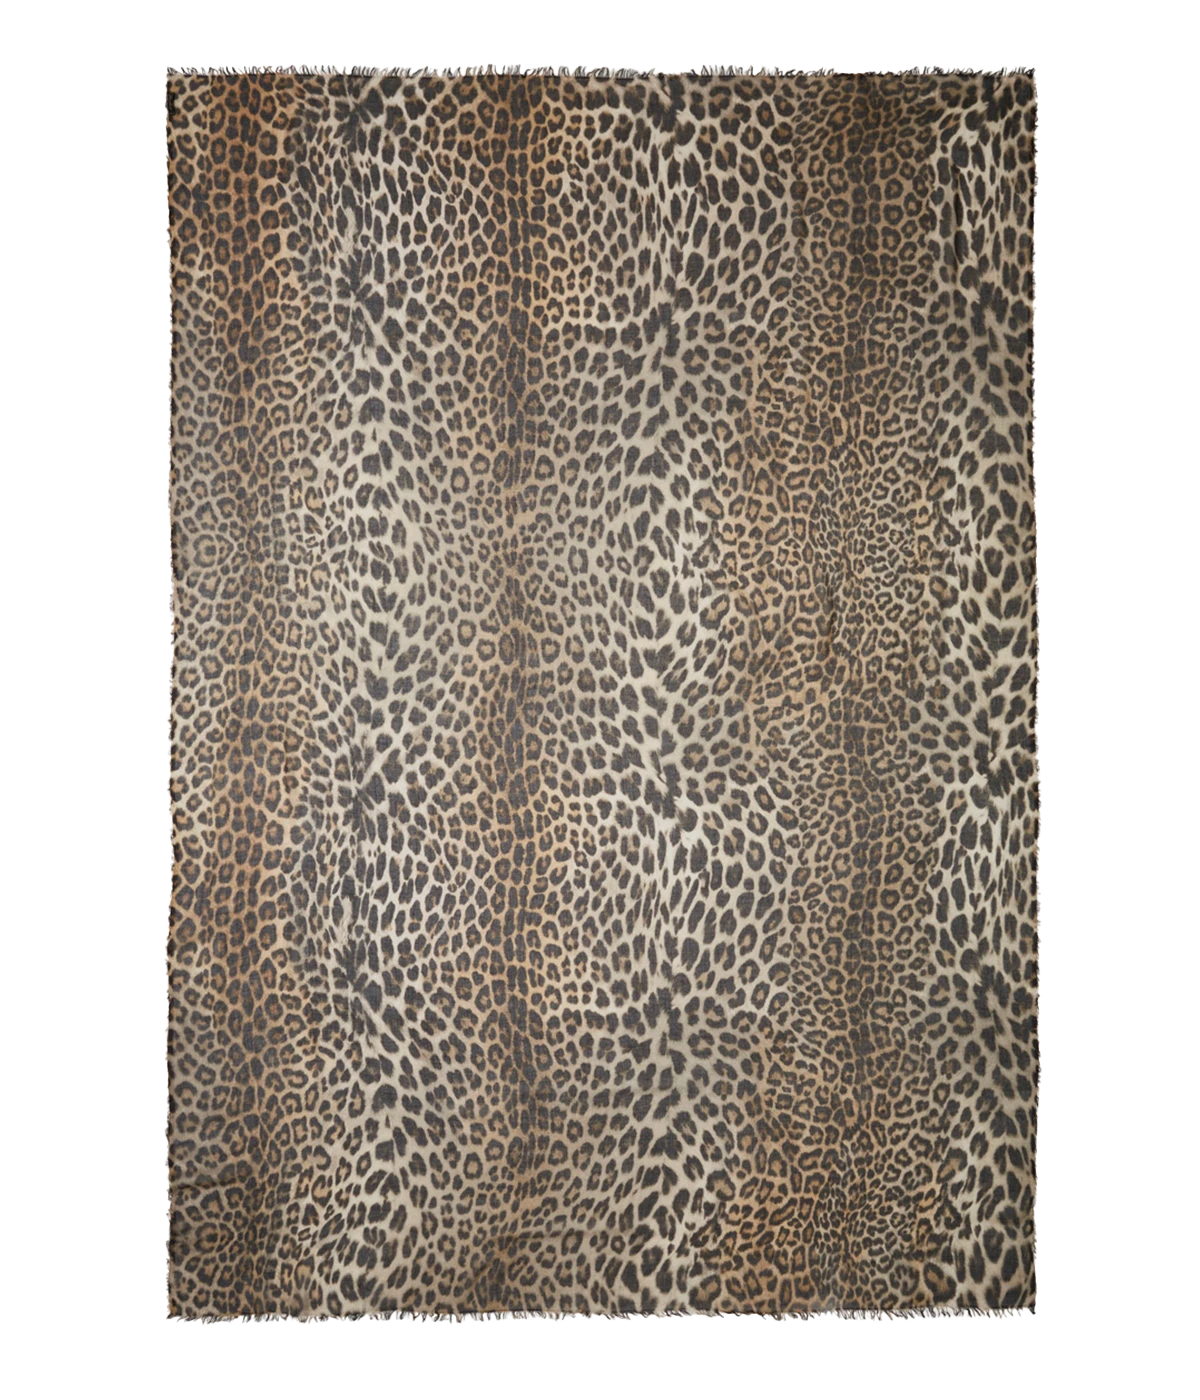 Tigrotta Scarf in Leopard